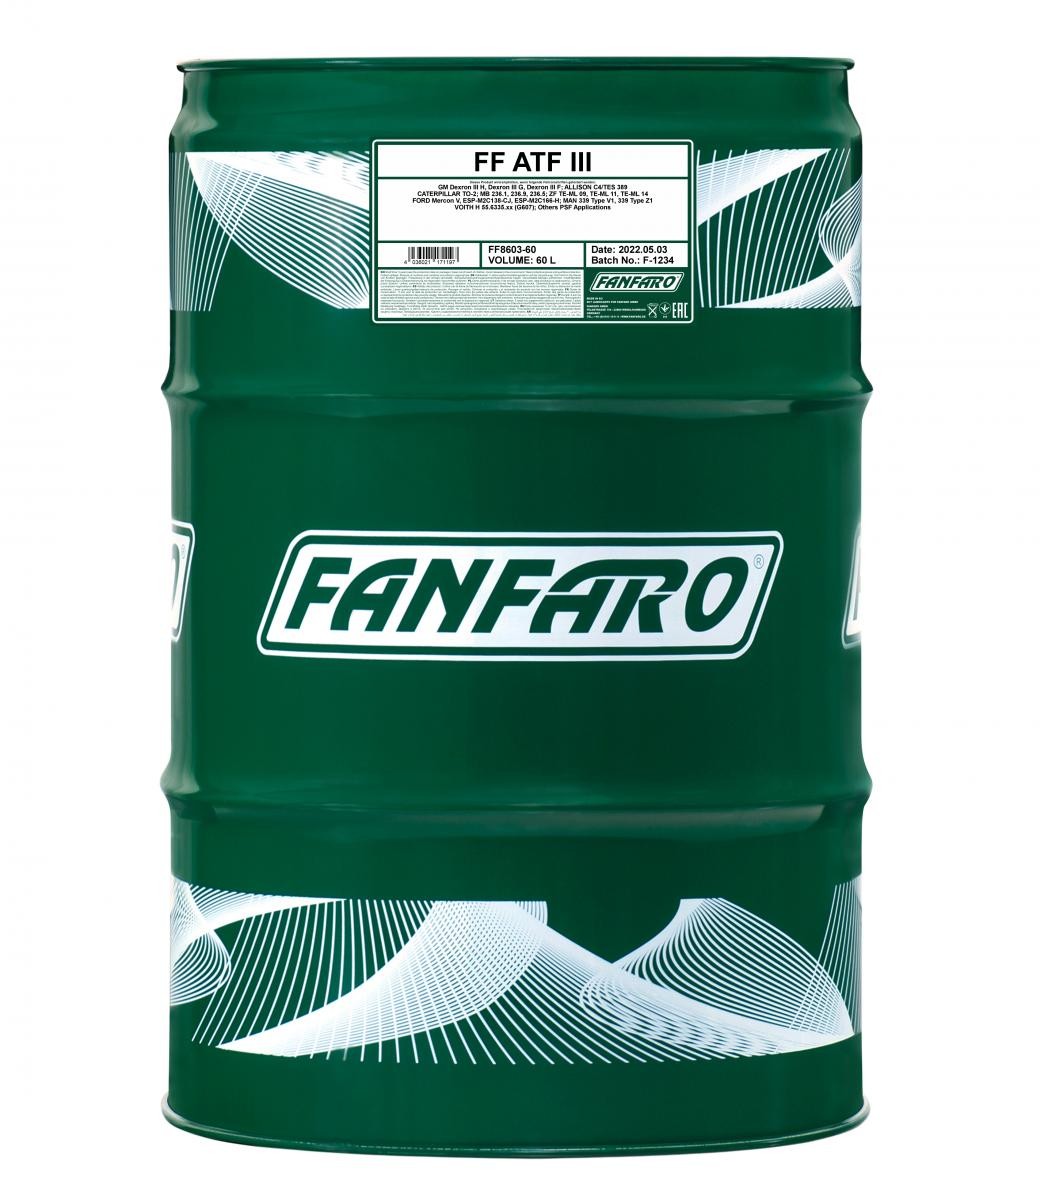 FANFARO FF8603-60 Automatikgetriebeöl für RENAULT TRUCKS D-Series Access LKW in Original Qualität